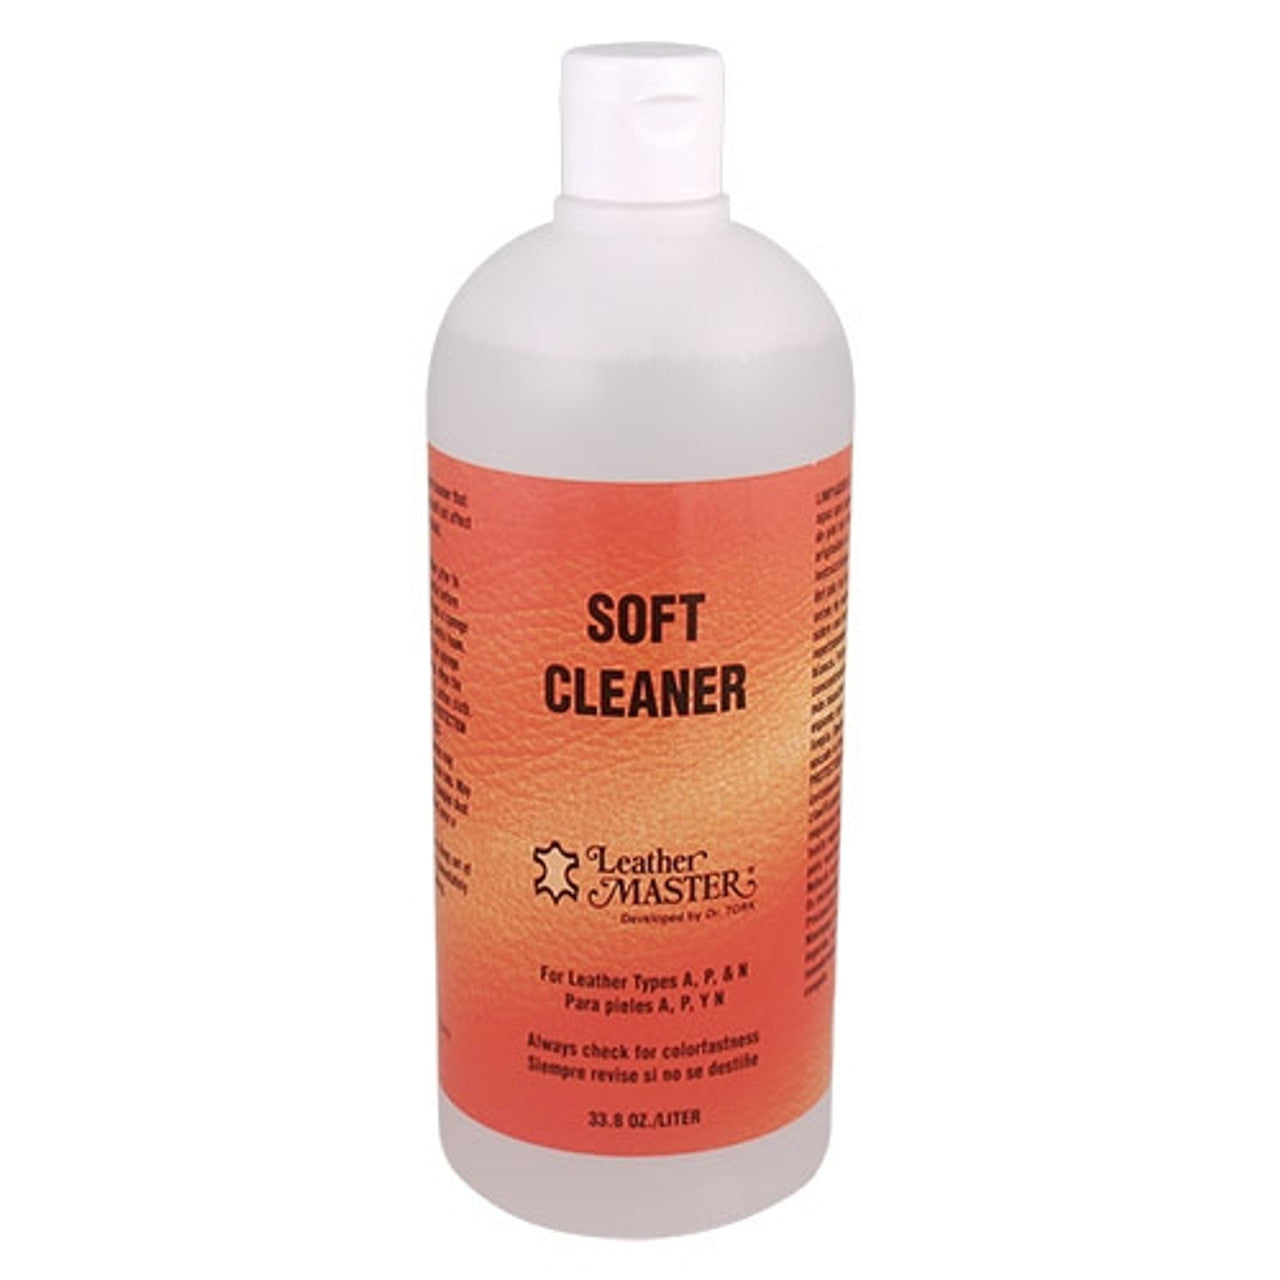 Leather Master Soft Cleaner - 1 Liter